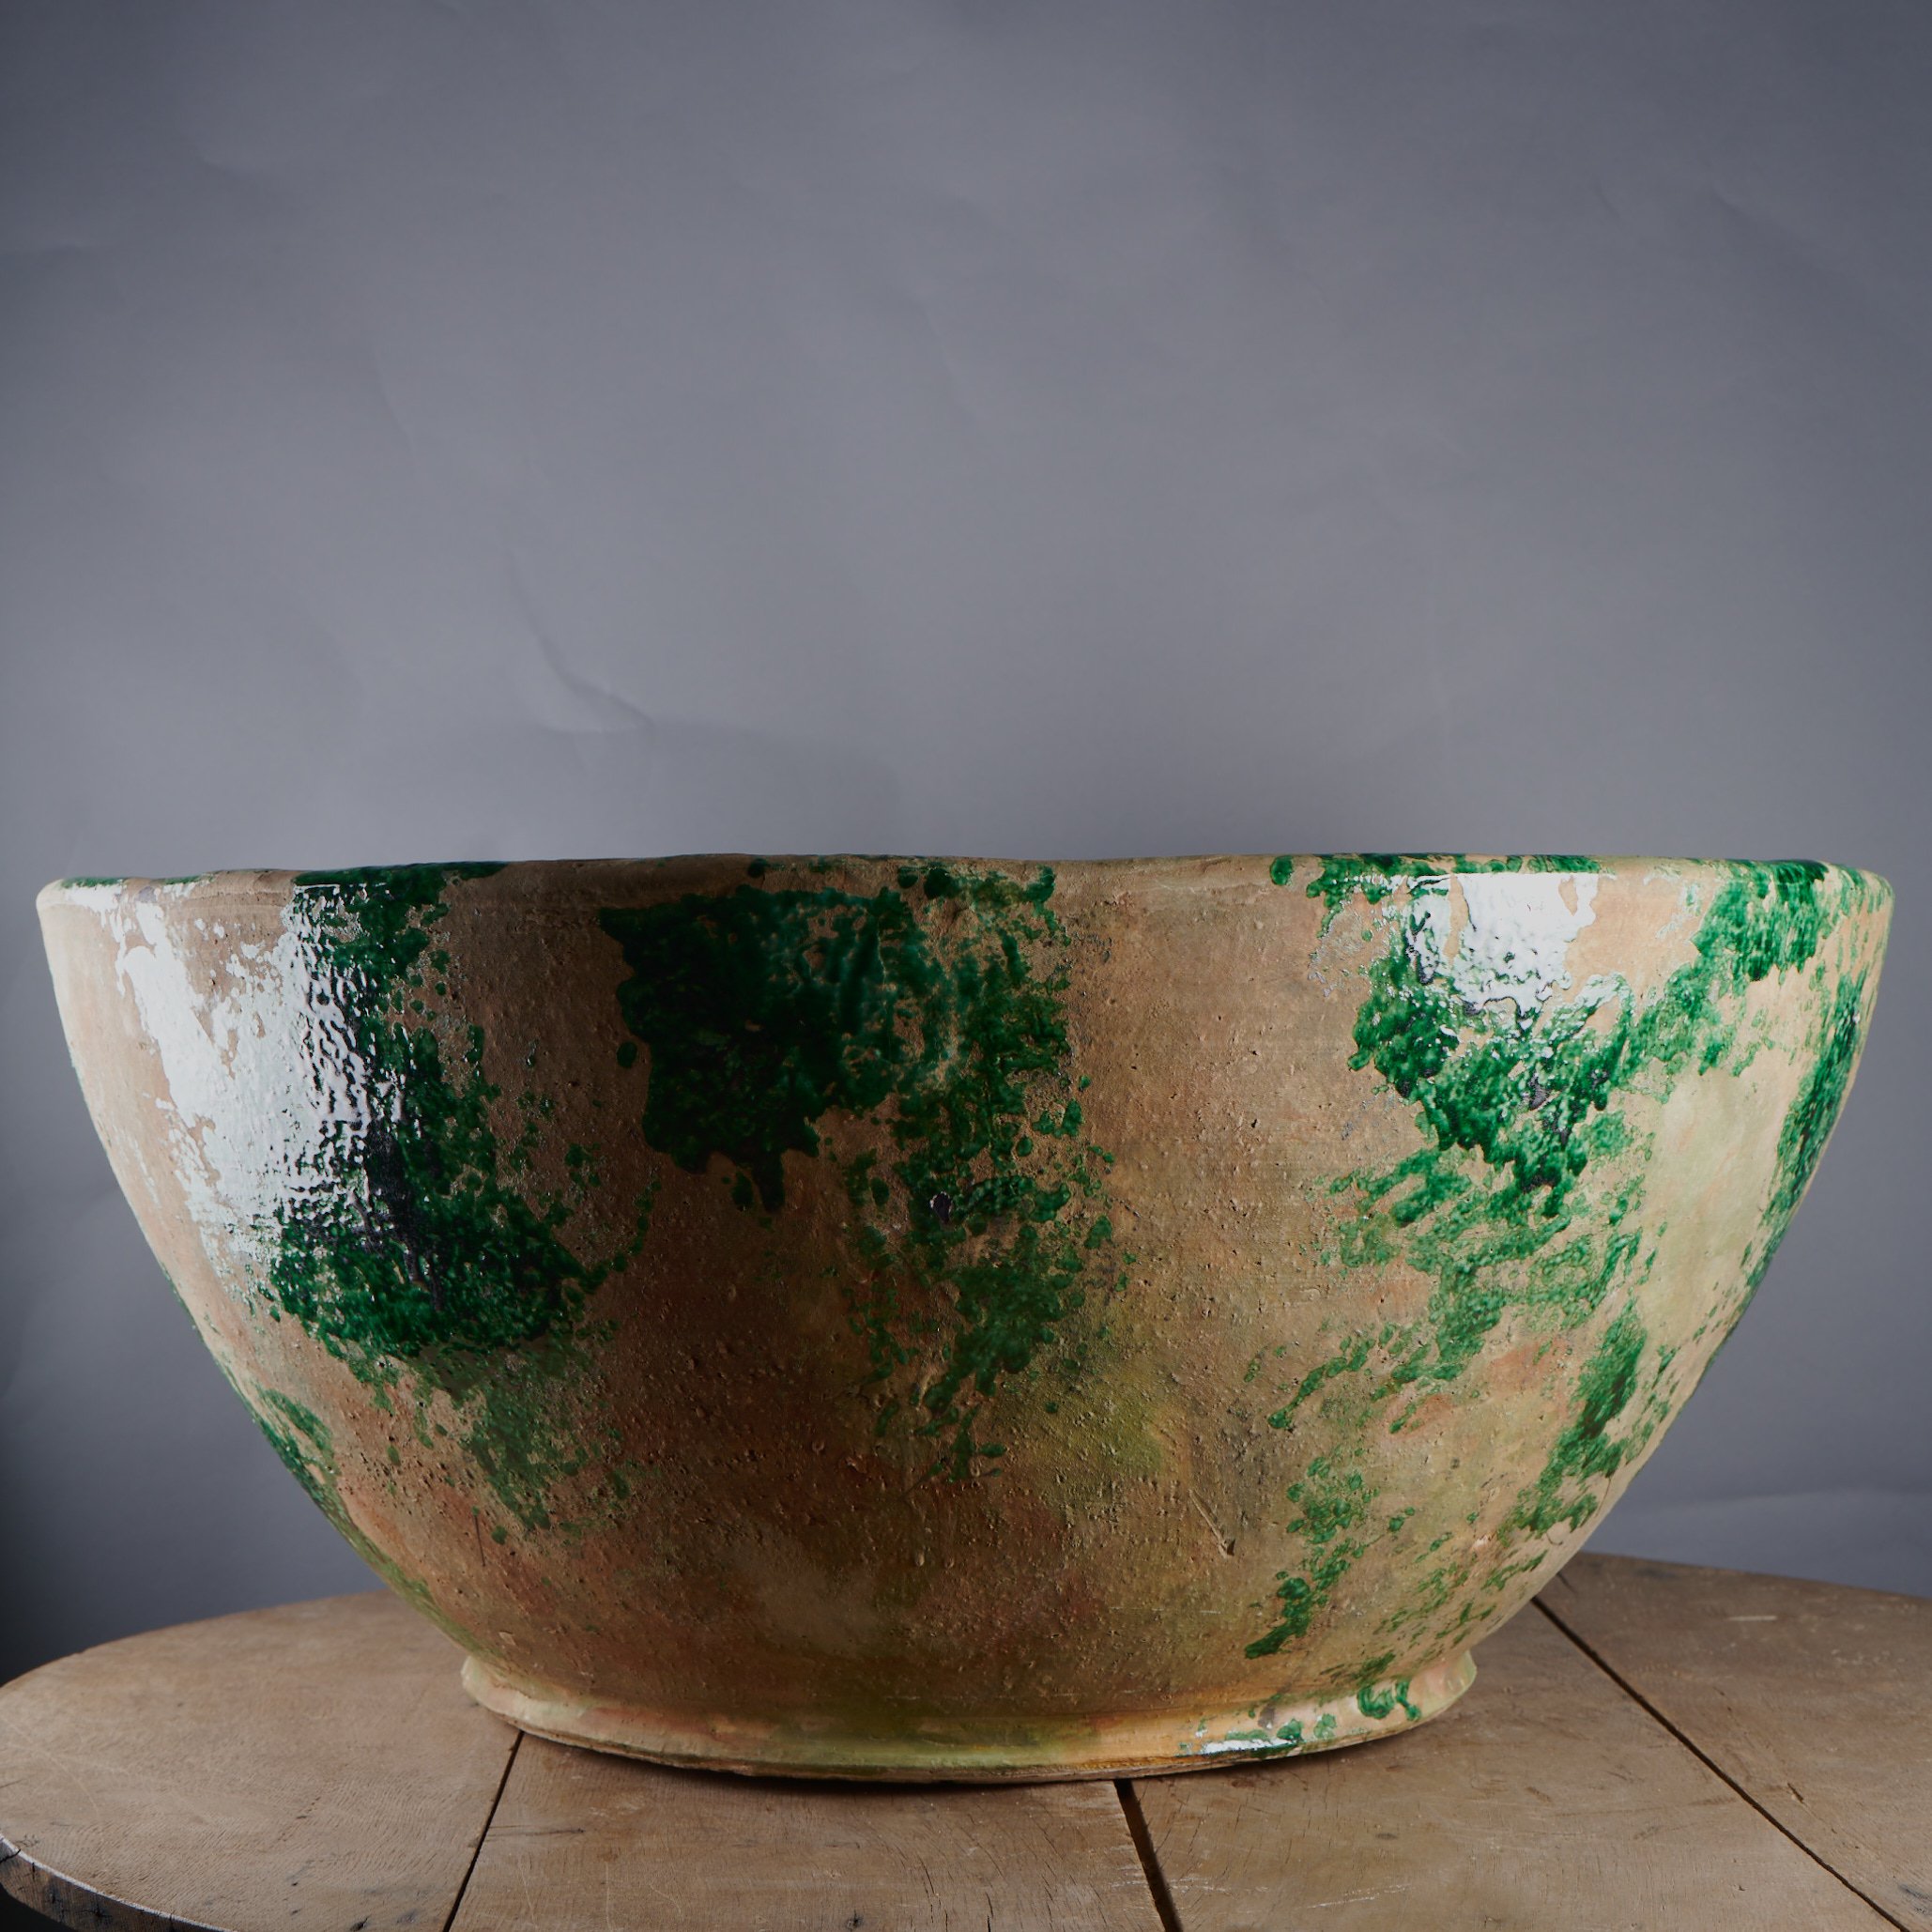 Vasque in antica and green